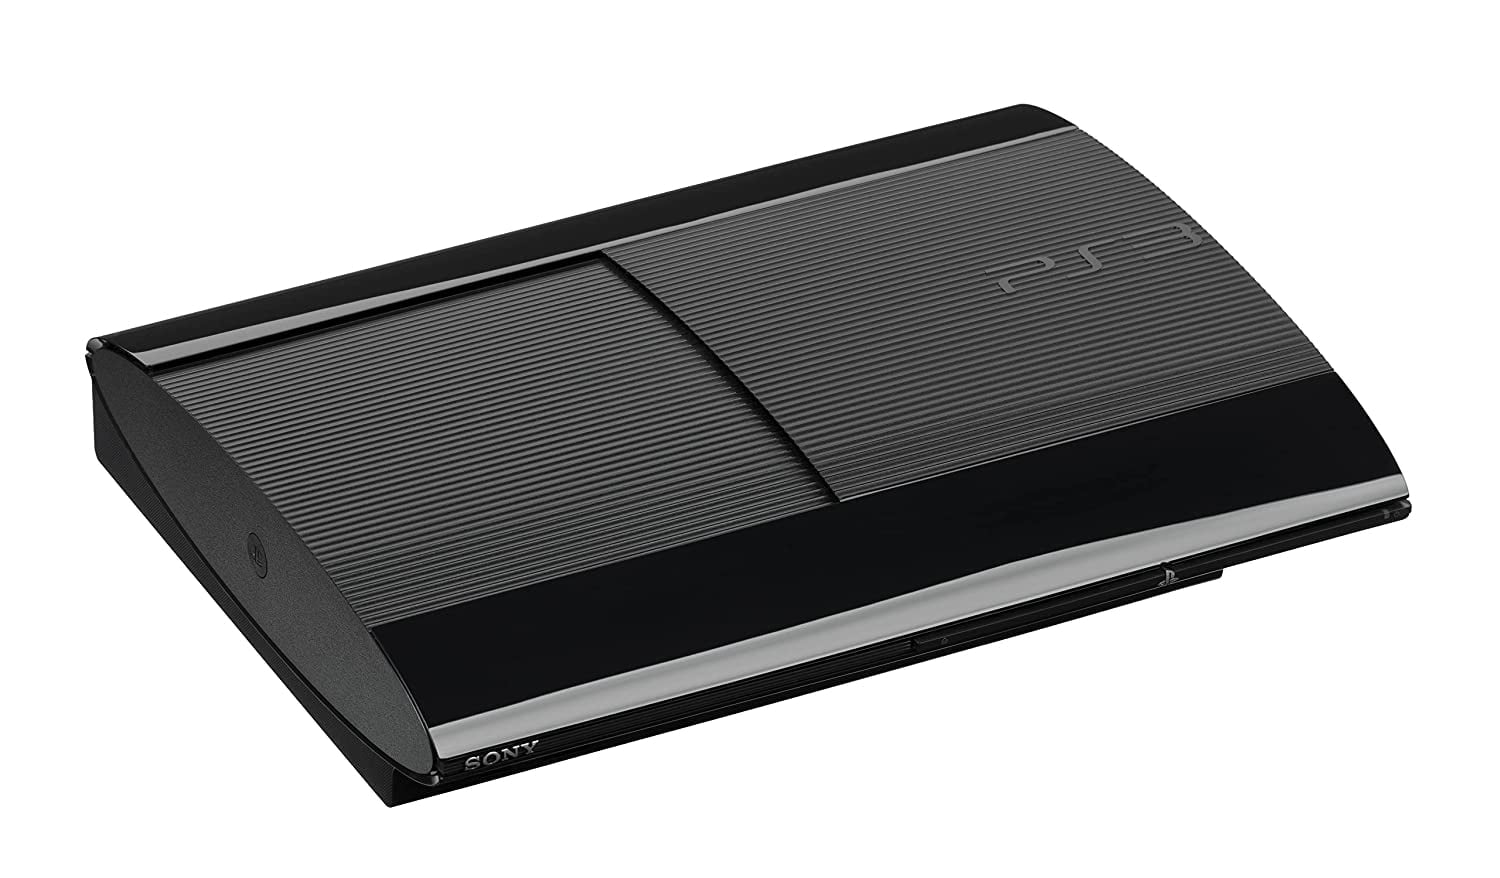 Playstation 3 Super Slim Top Loading 500GB Console - Black 4001C 4301C